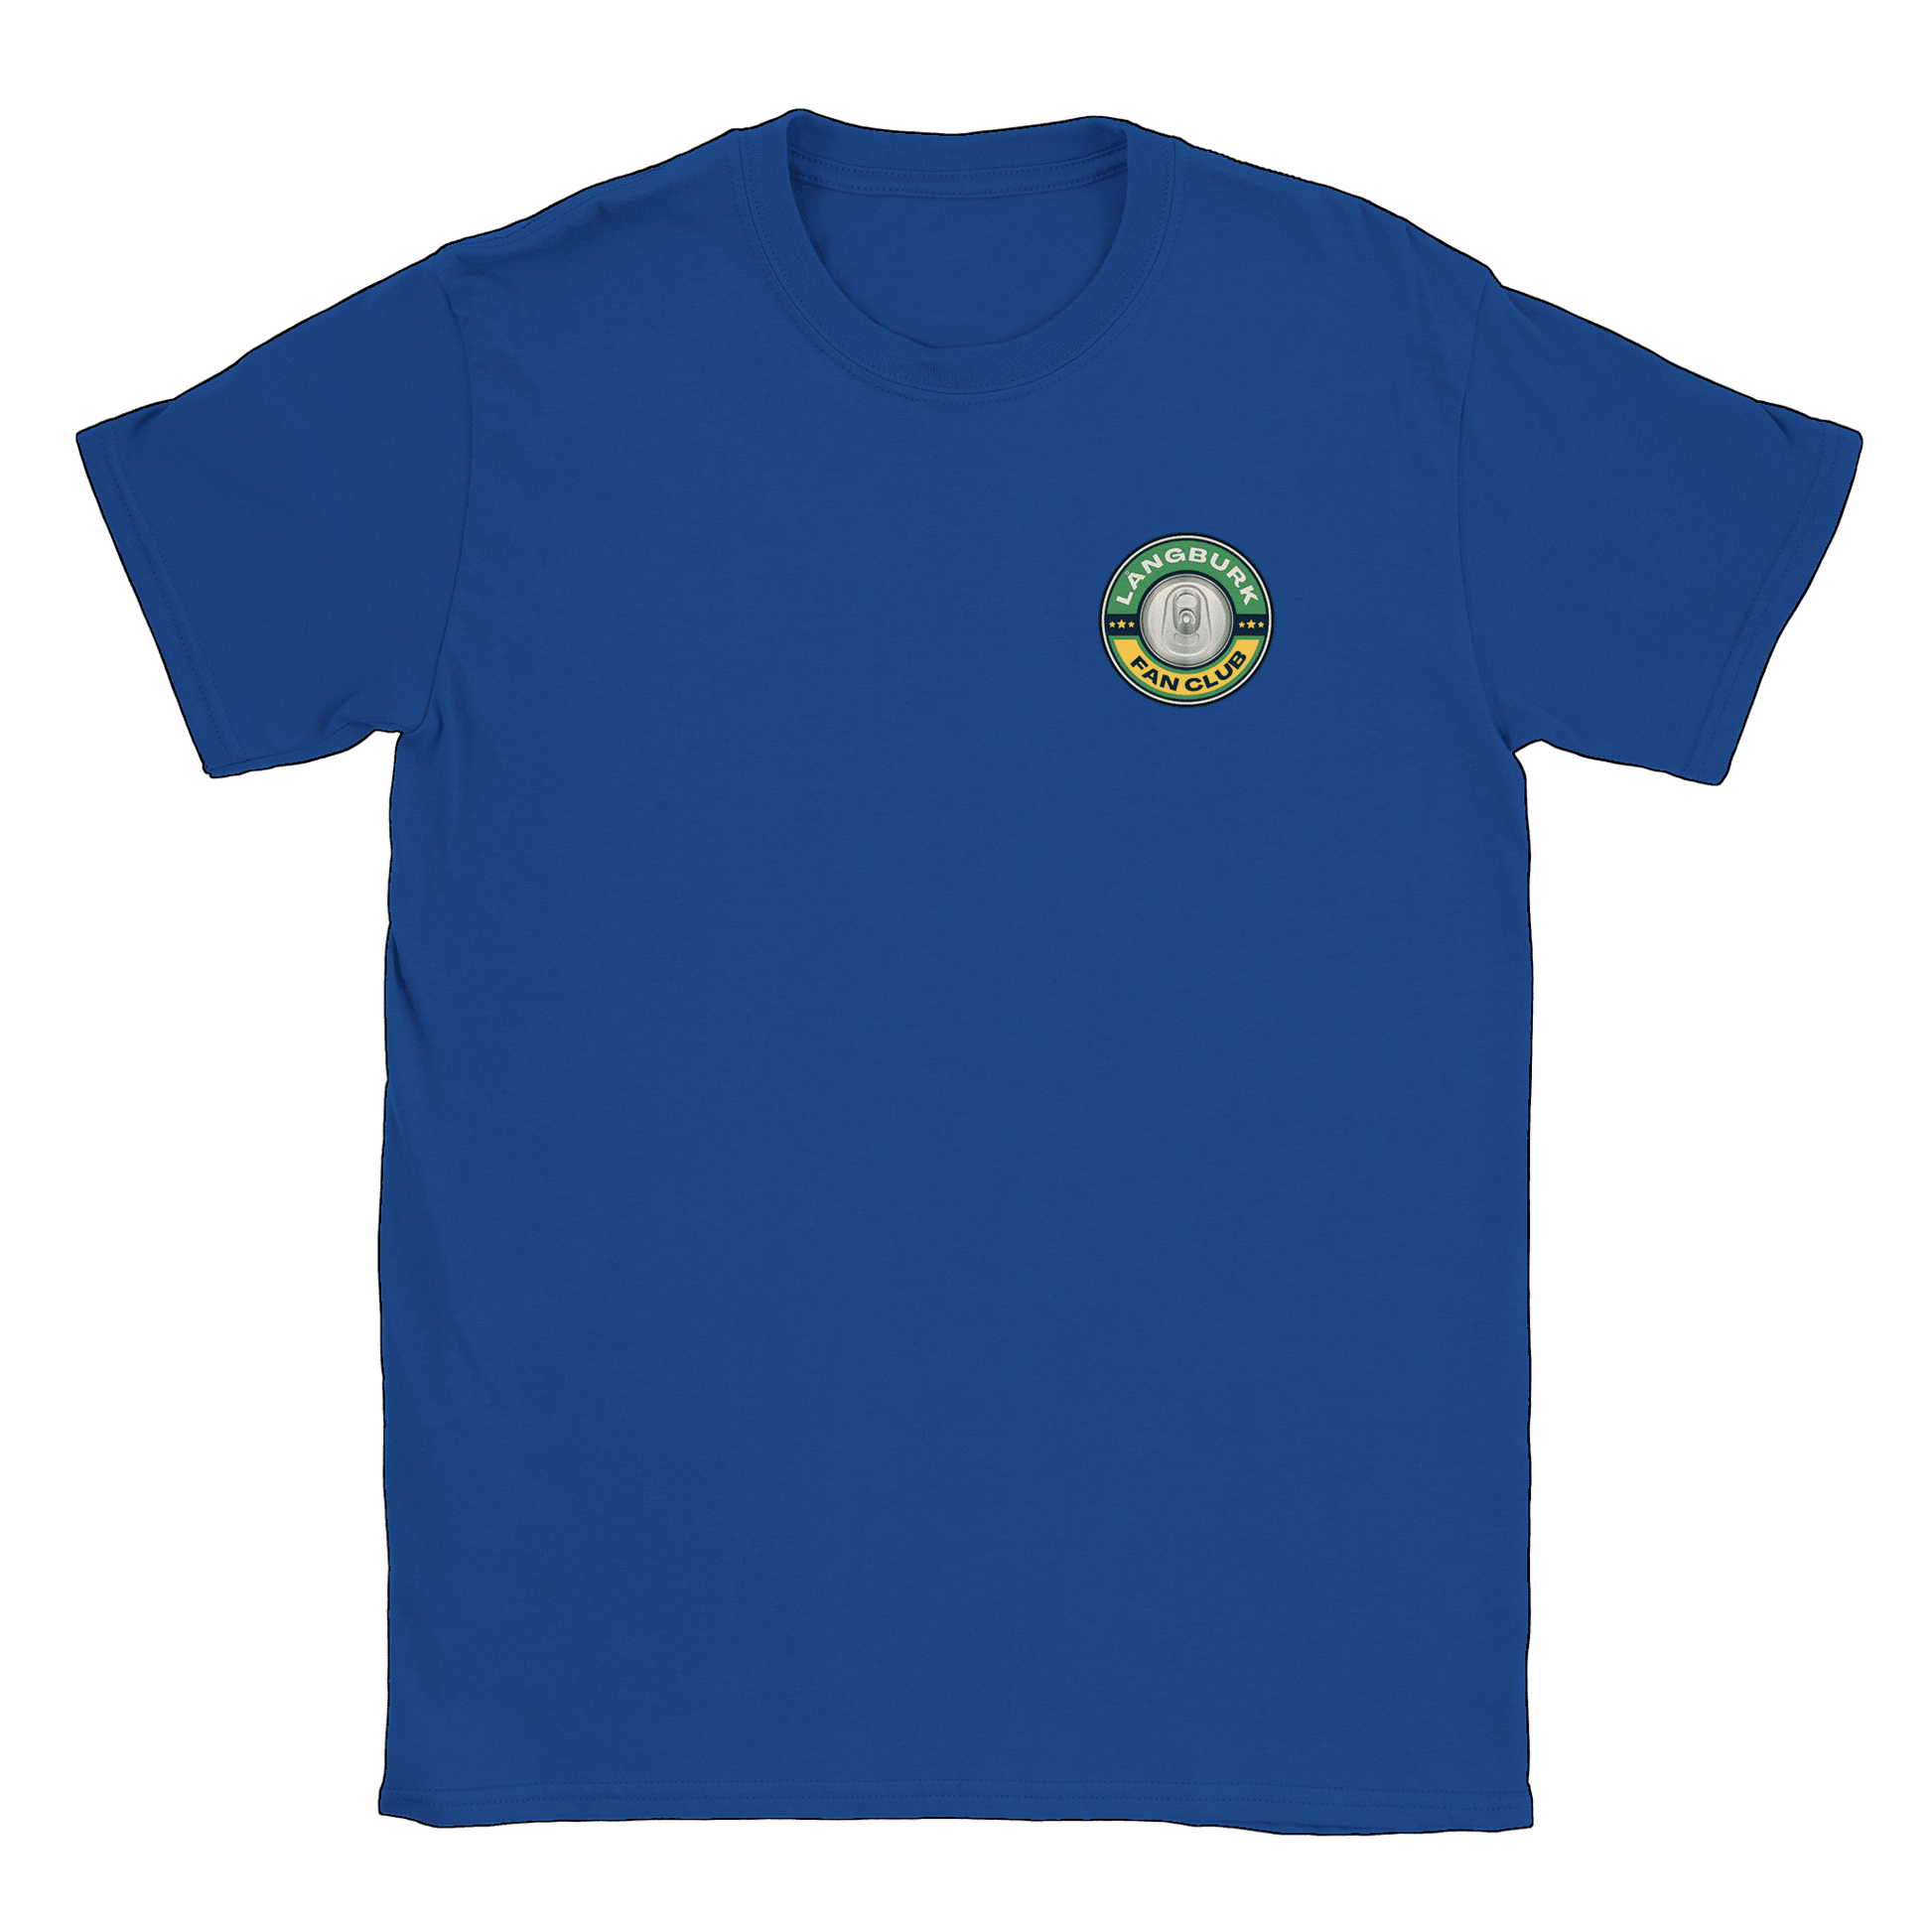 Långburk Fan Club liten - T-shirt Royal